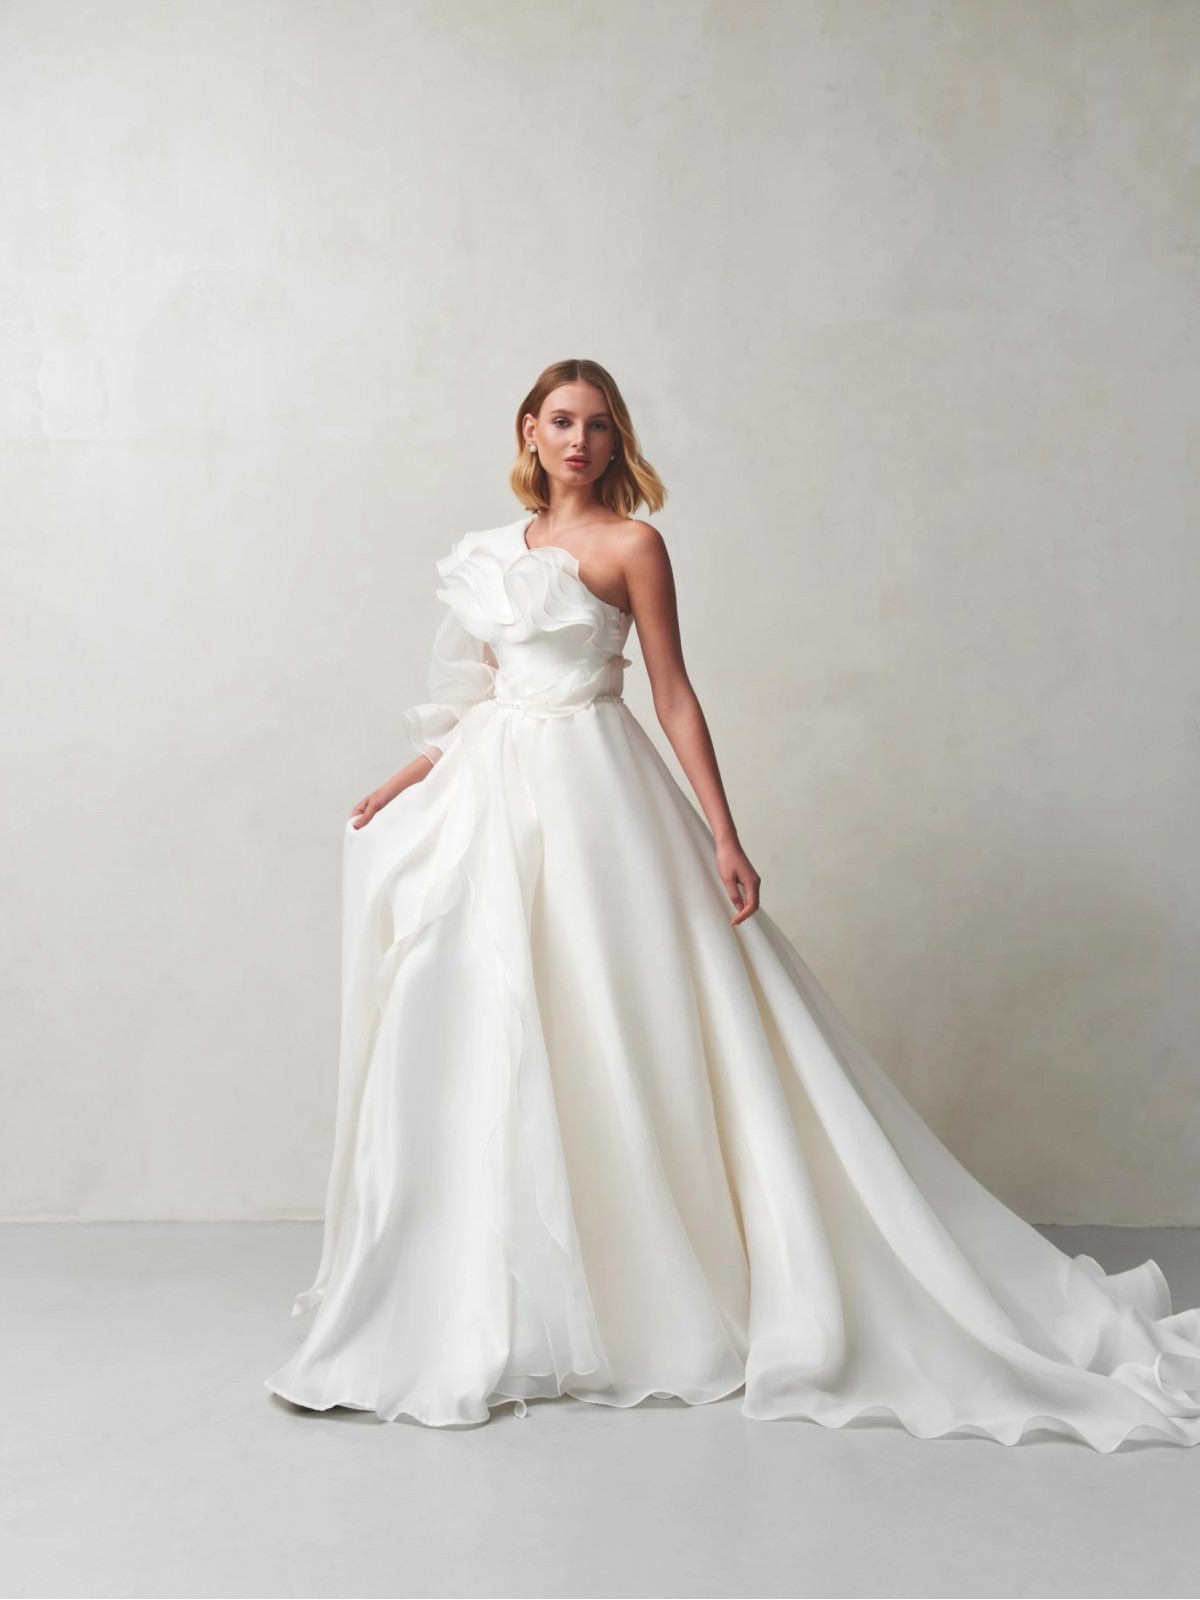 Luxury Wedding Dress With Detachable Sleeve - Juelle - LLR-18115.00.17